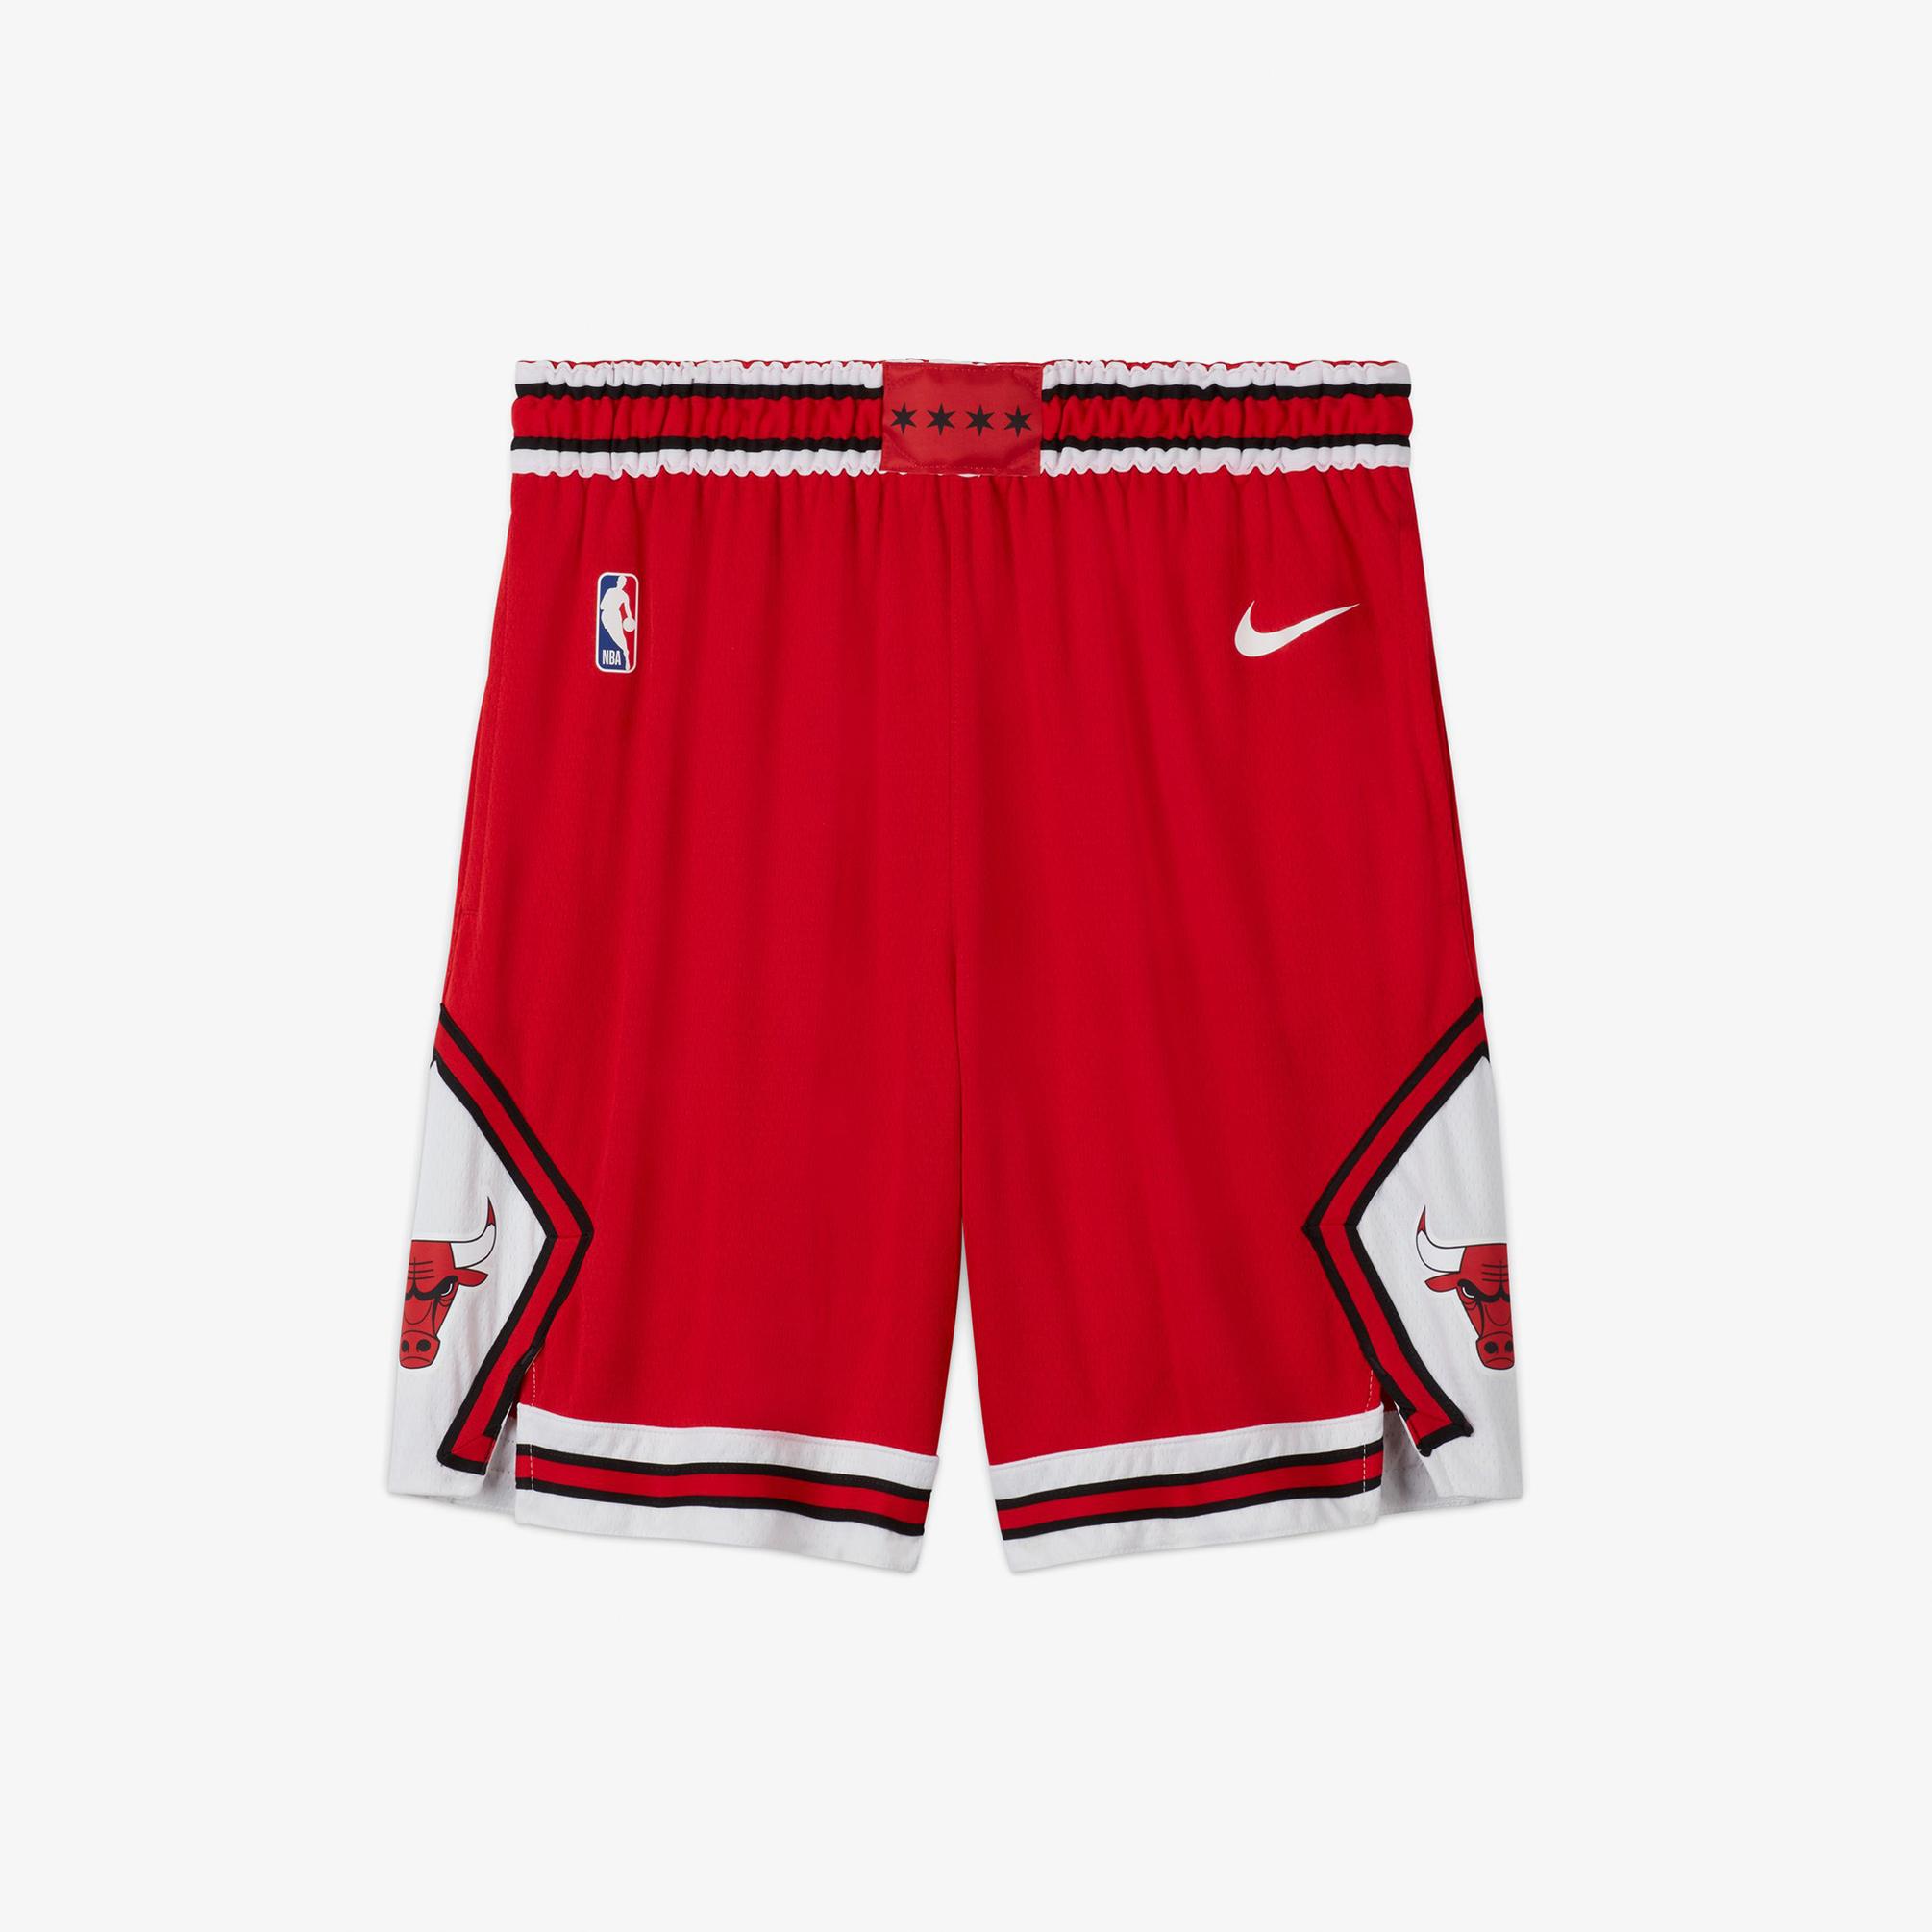  Nike Chicago Bulls NBA Erkek Kırmızı Şort